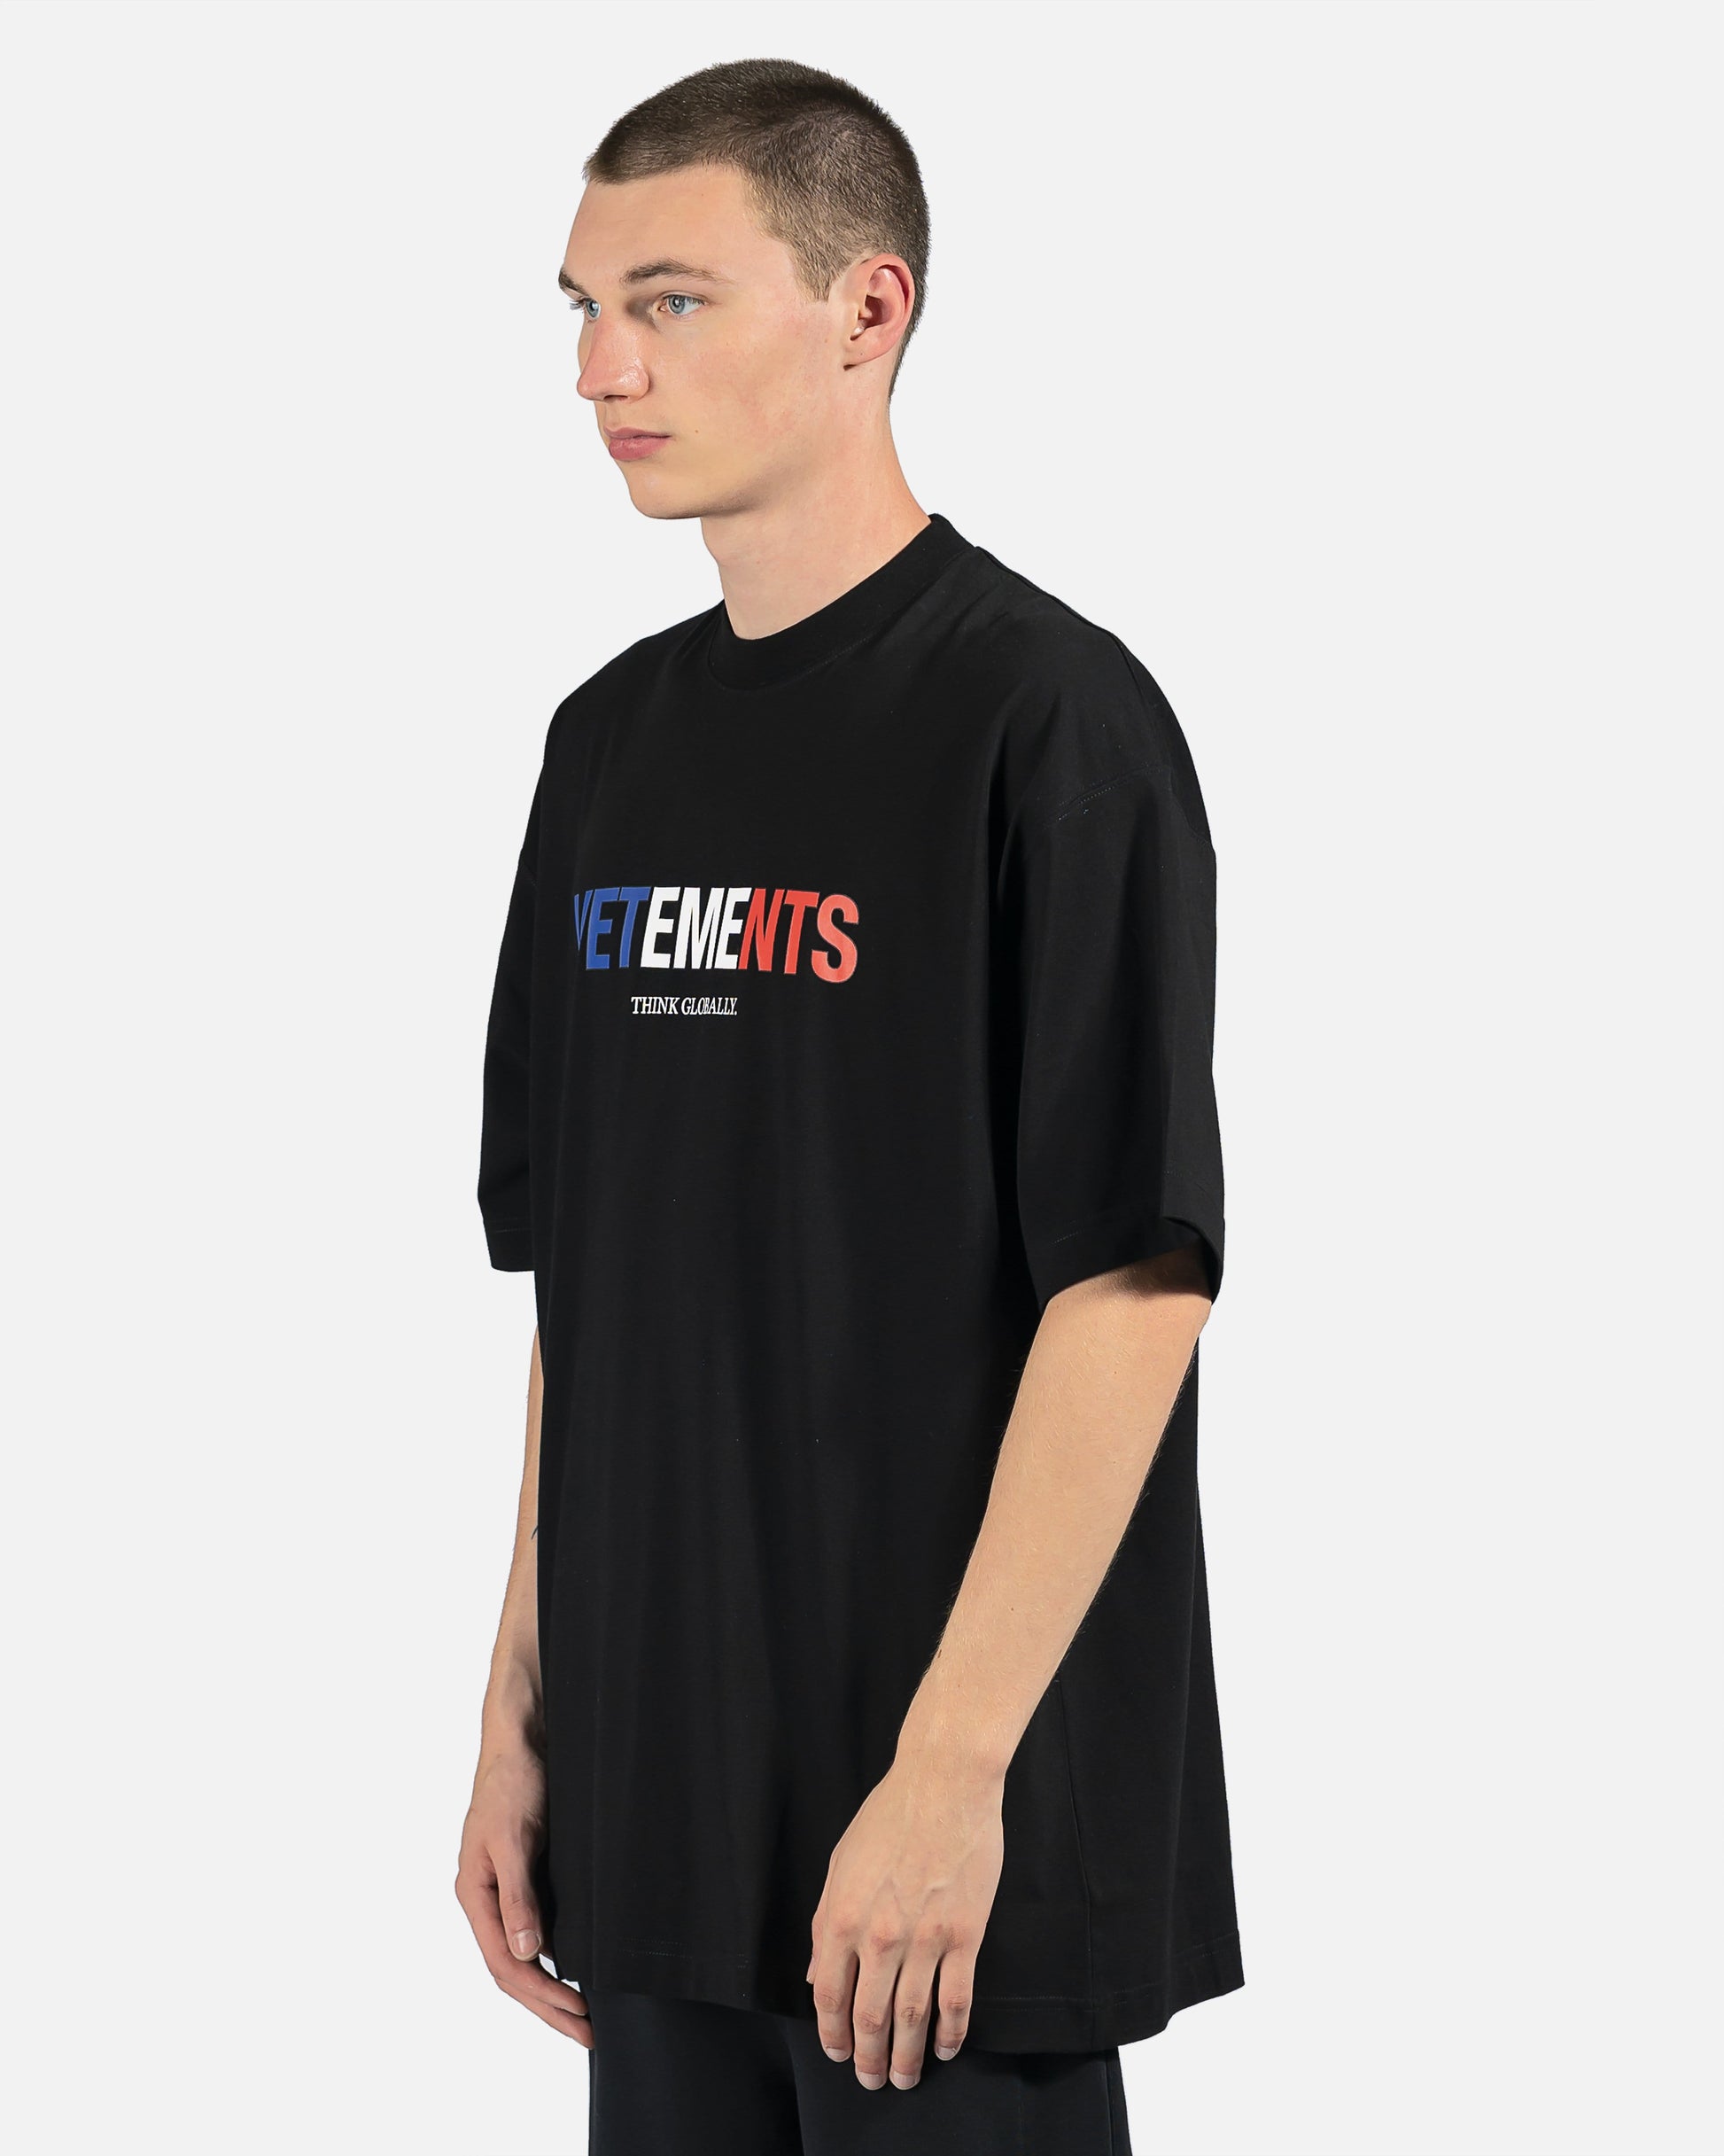 VETEMENTS Men's T-Shirts France Flag Logo Tee in Black